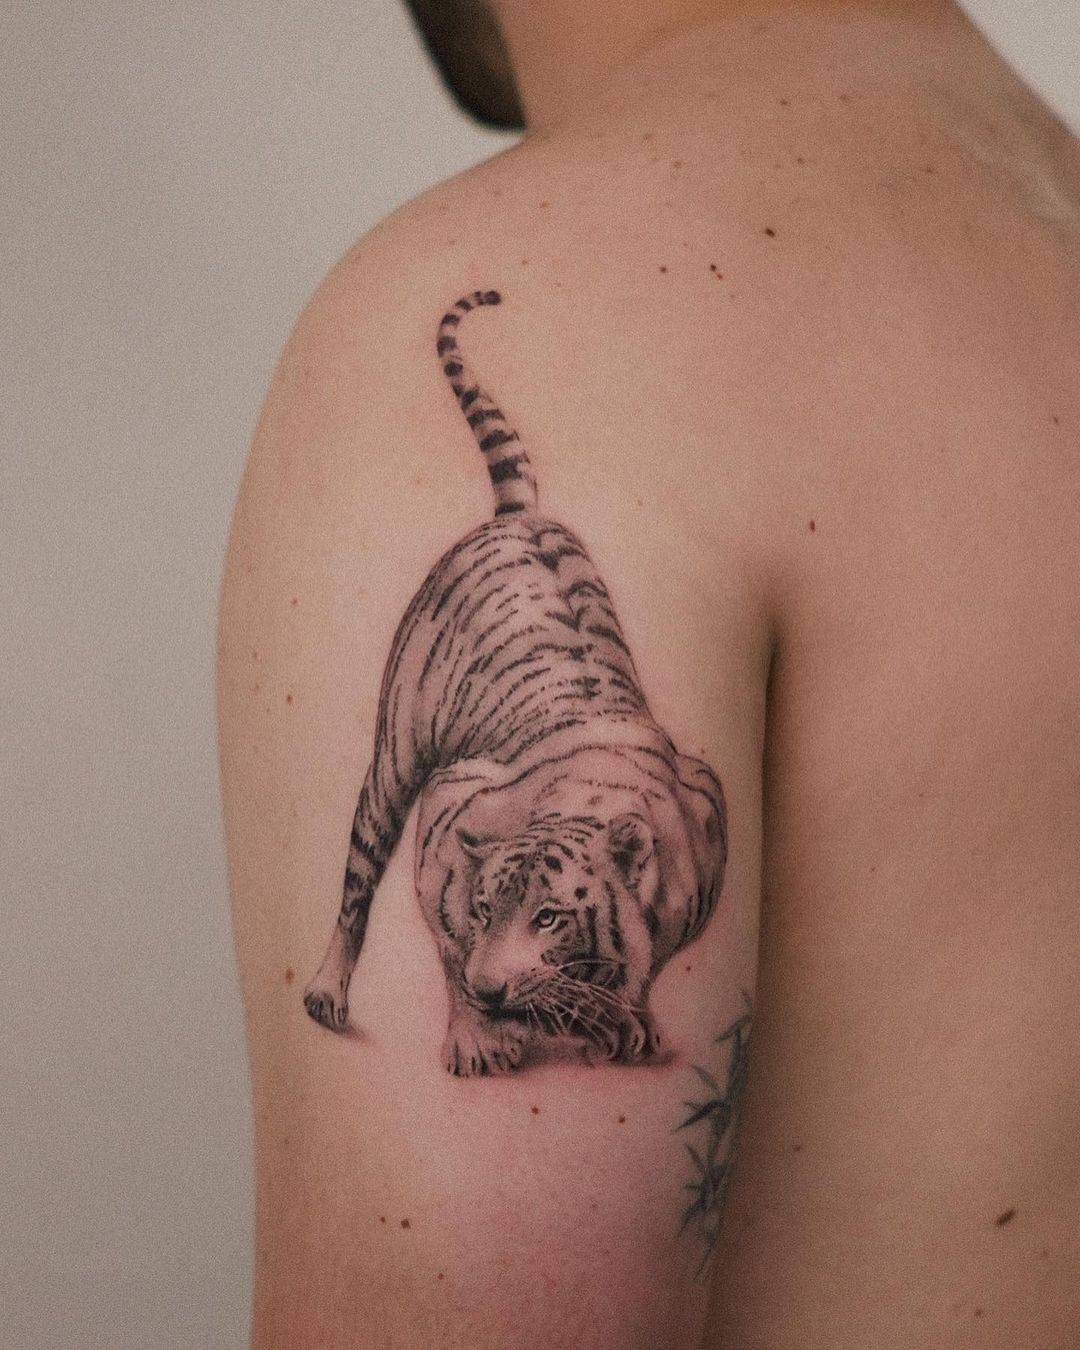 Amazing white tiger tattoo on arm by jc.arana ink